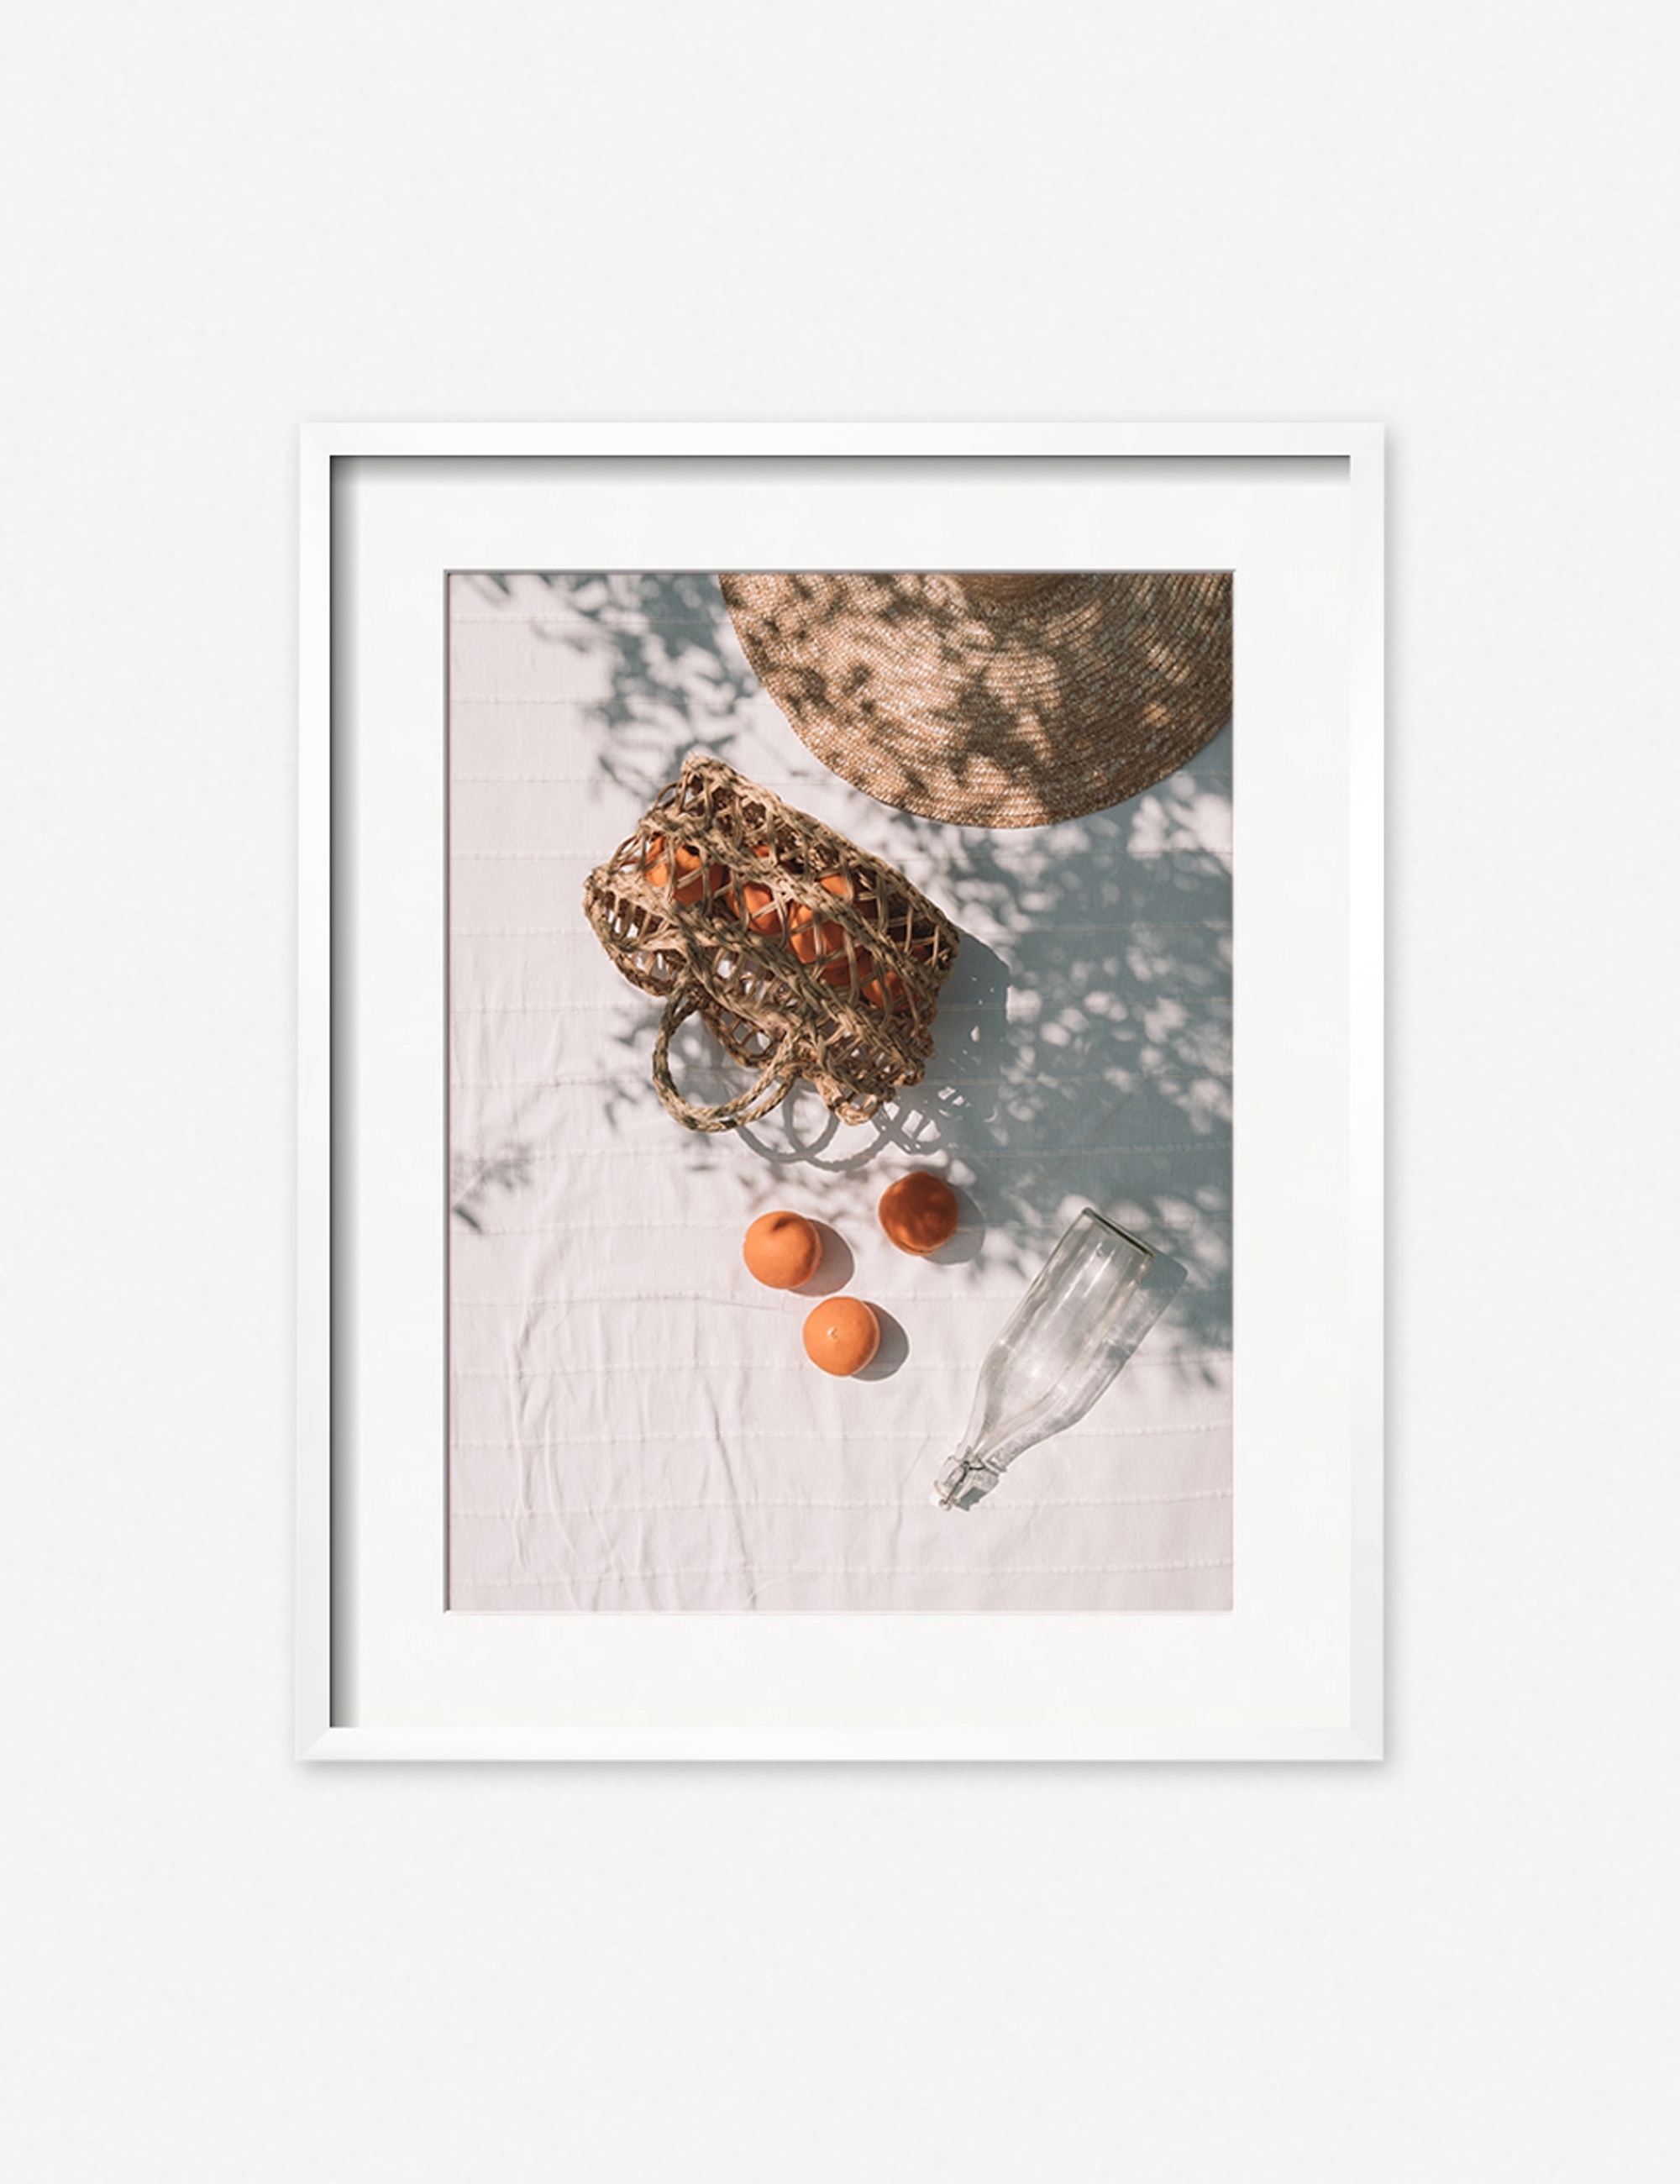 Siesta, By Carley Rudd 30.5" x 36.5" Framed - White - Image 0